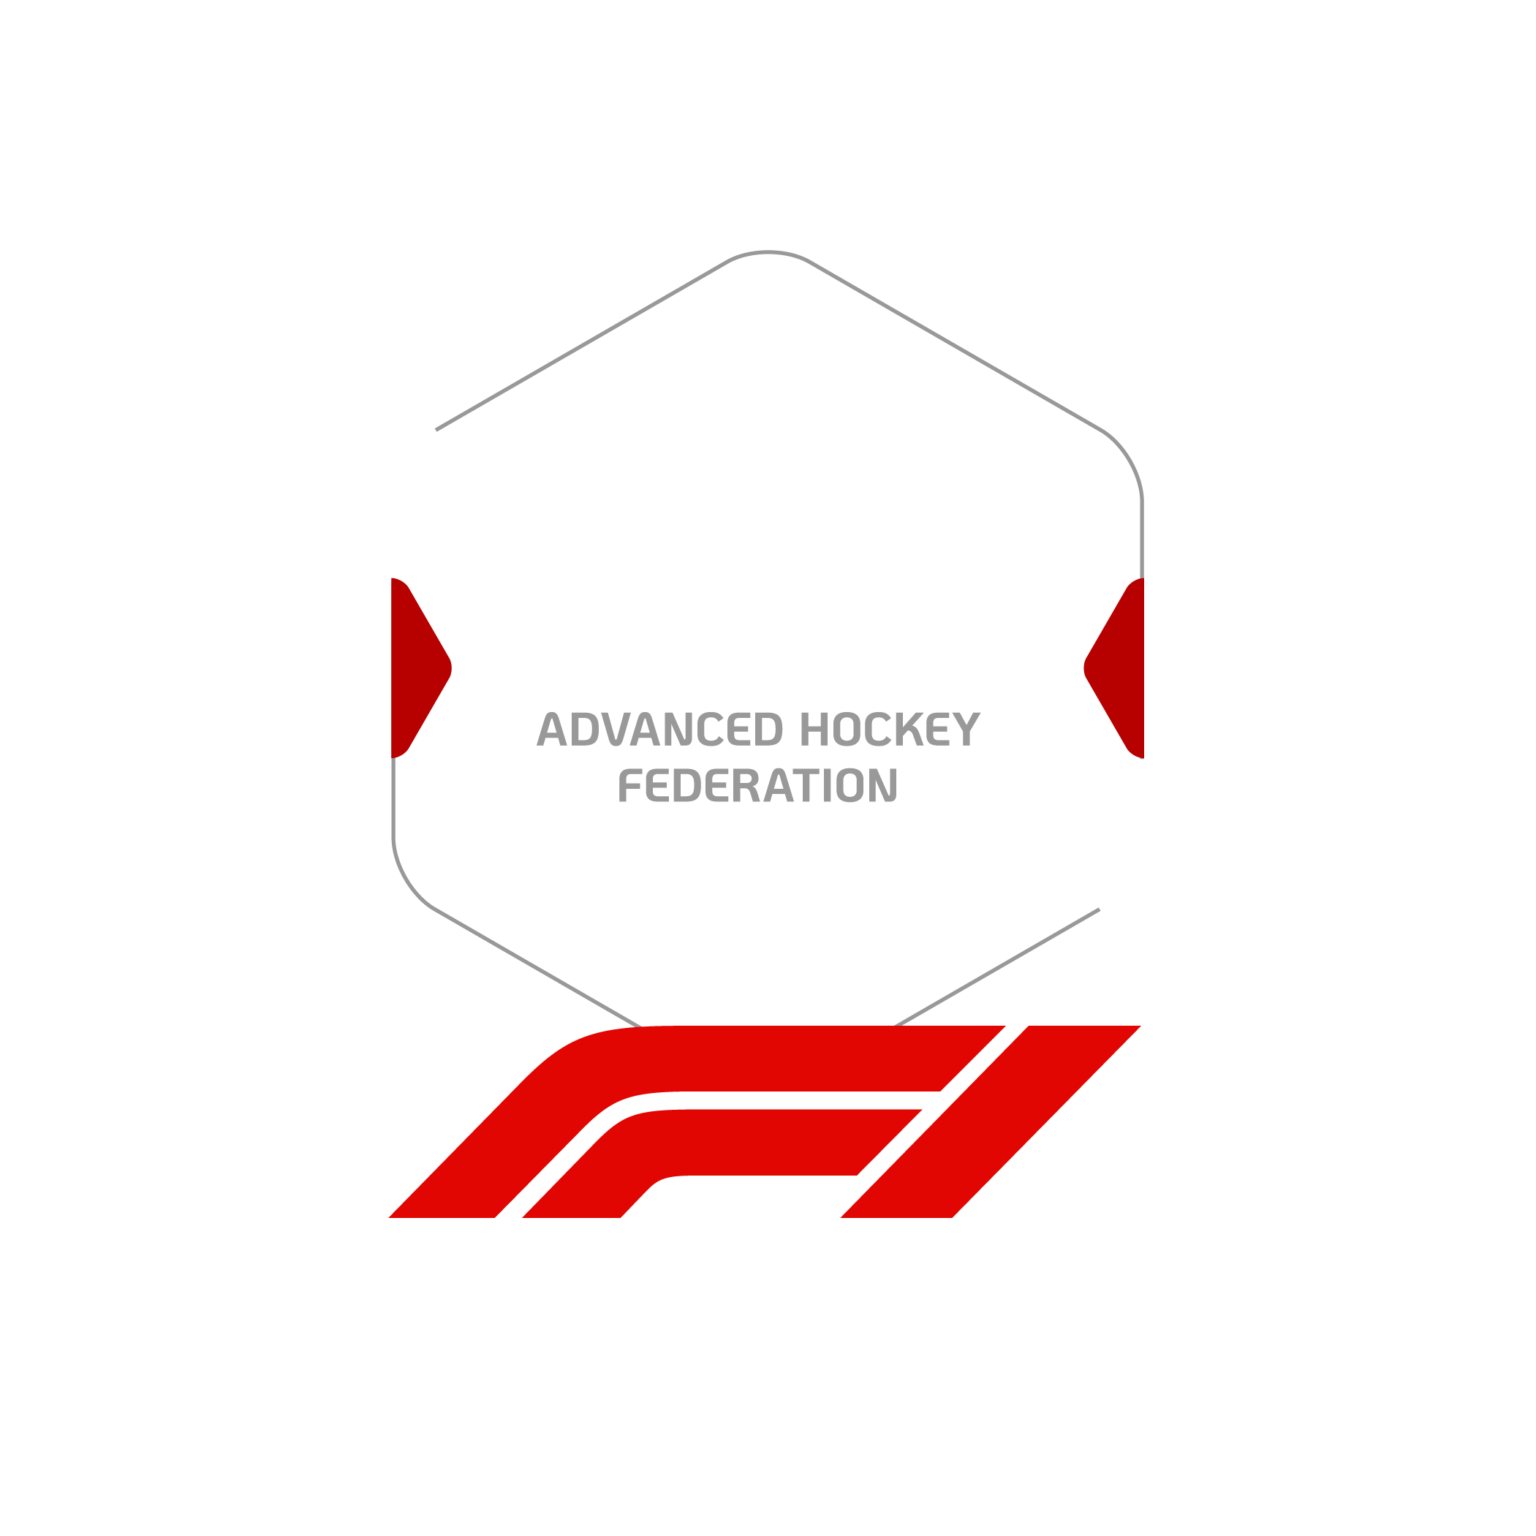 F1-AHF-HOCKEY